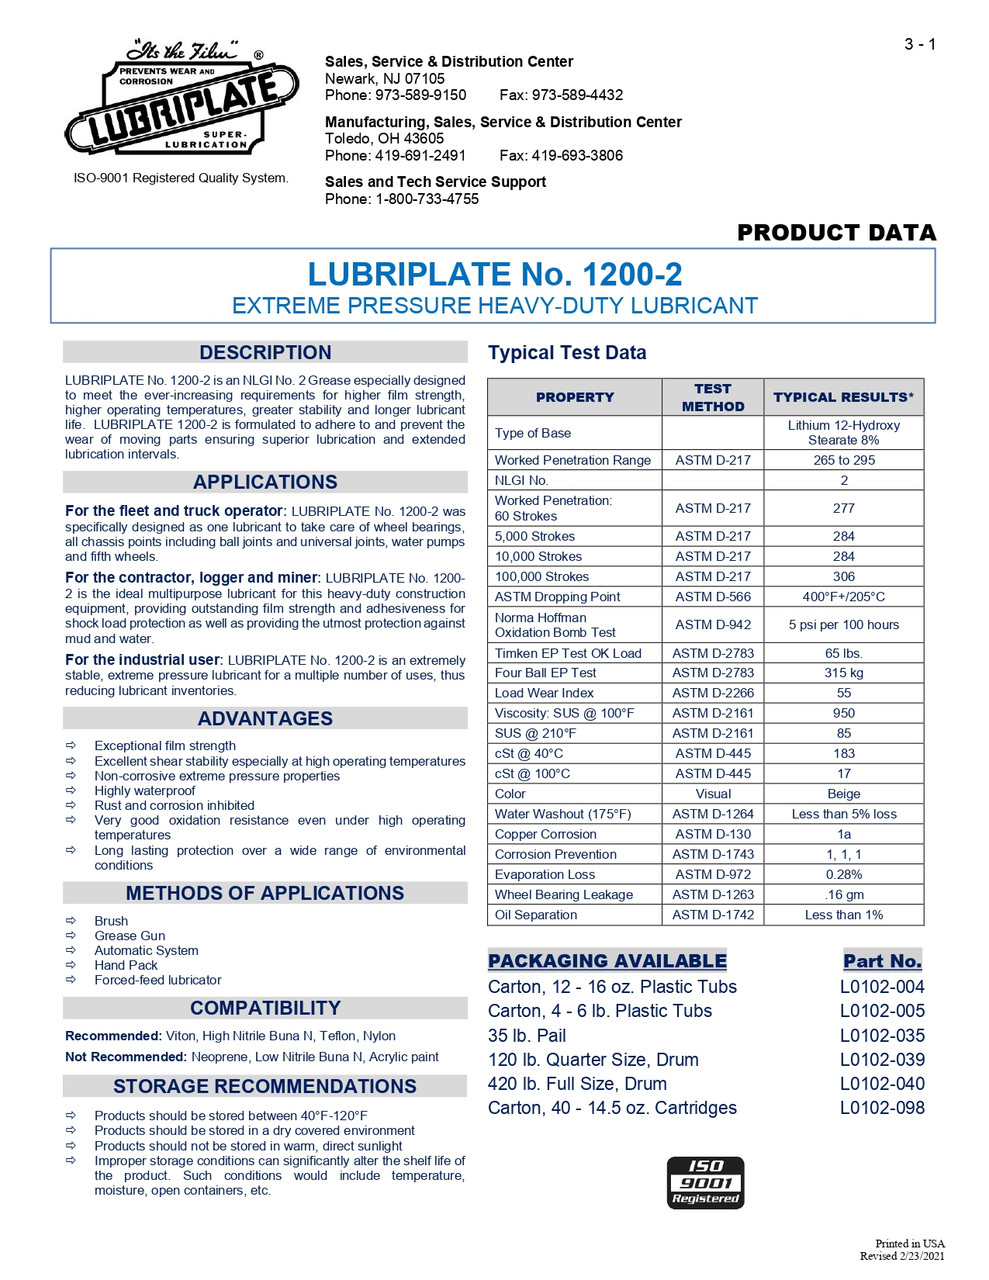 No. 1200-2 Heavy Duty Lithium Grease 14.5oz Cartridge   L0102-098